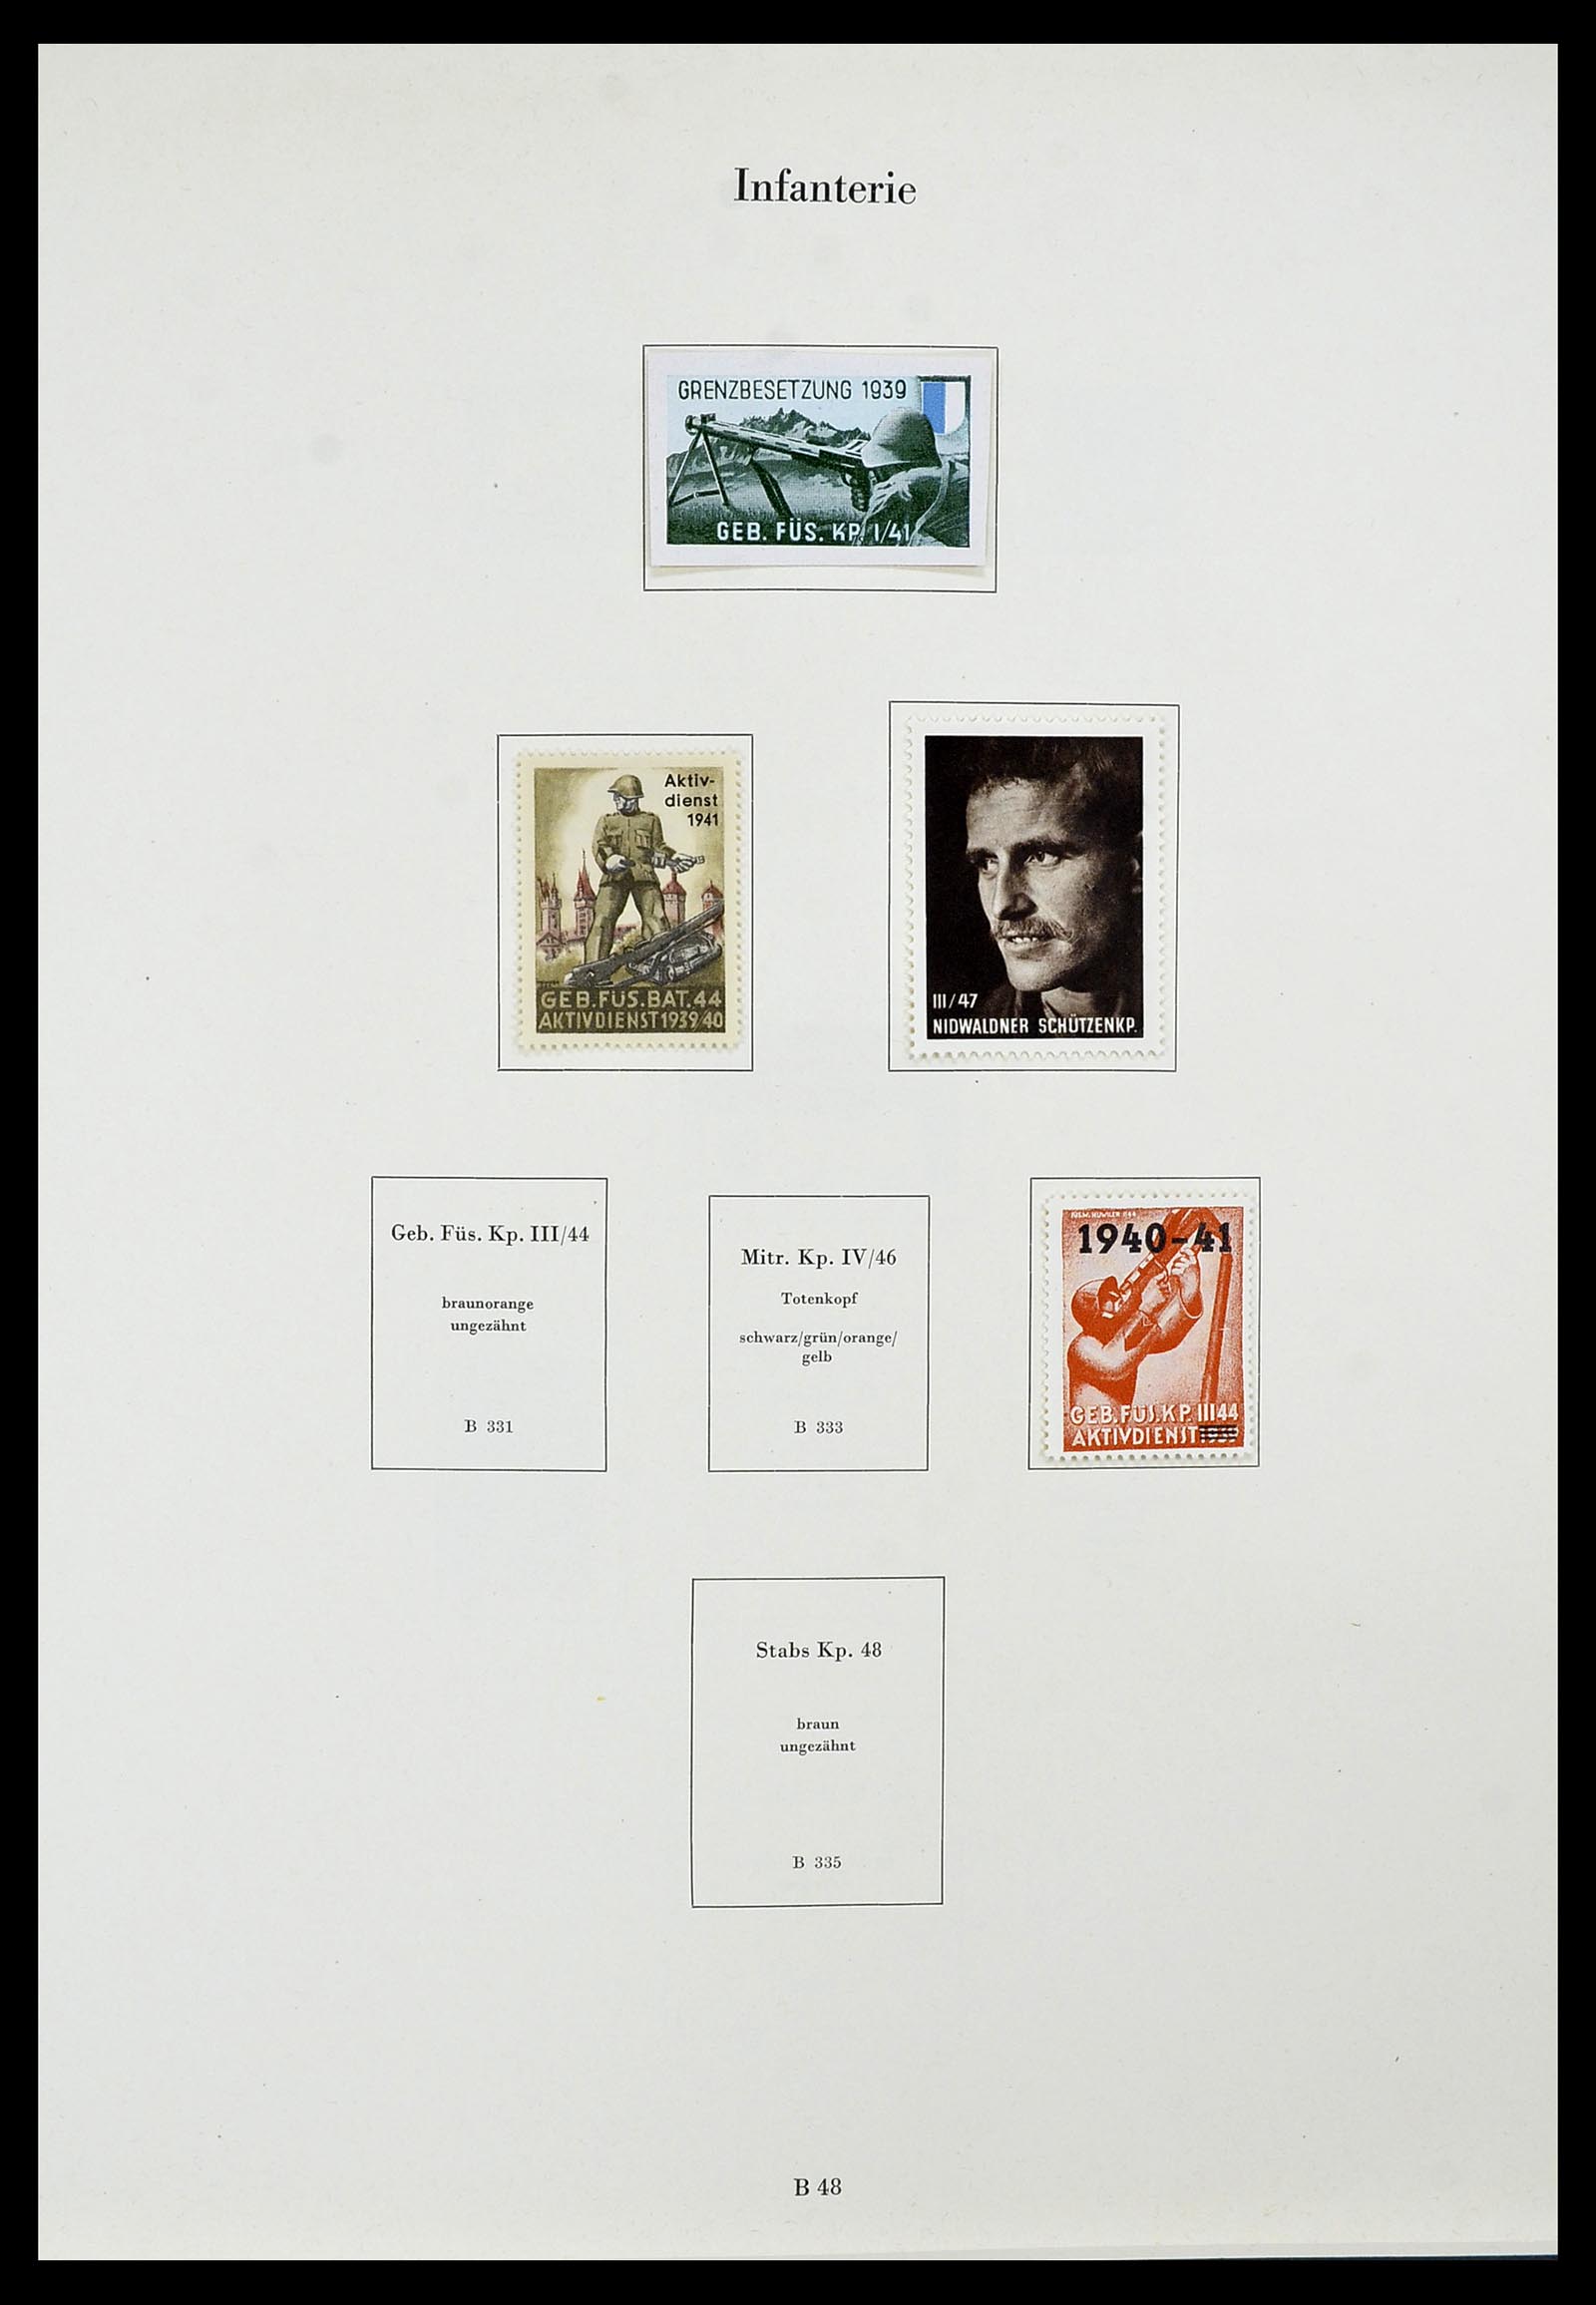 34234 073 - Stamp collection 34234 Switzerland soldier stamps 1939-1945.